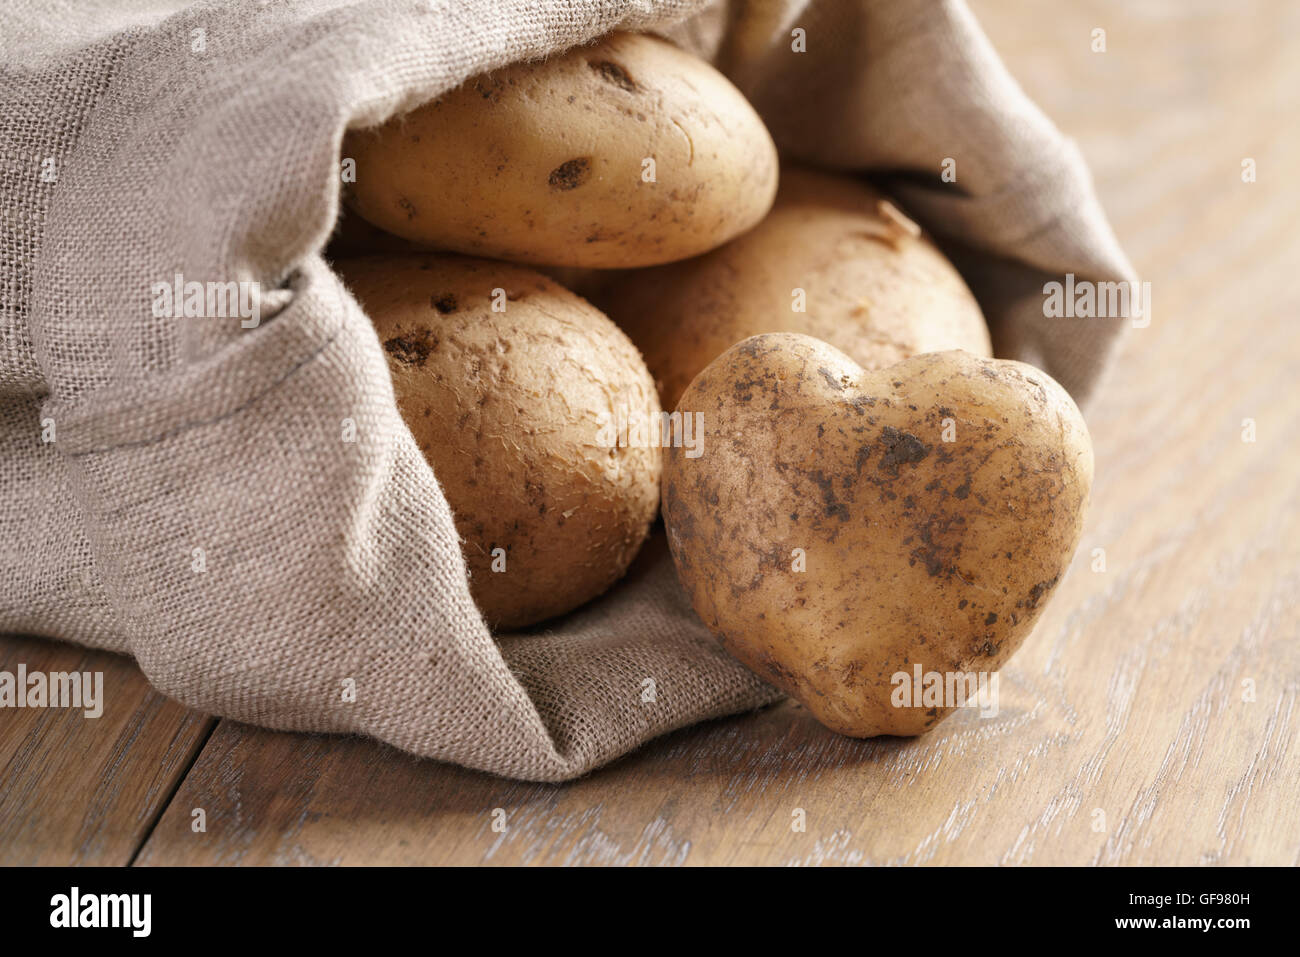 https://c8.alamy.com/comp/GF980H/sack-full-of-organic-potatoes-on-oak-wooden-table-GF980H.jpg